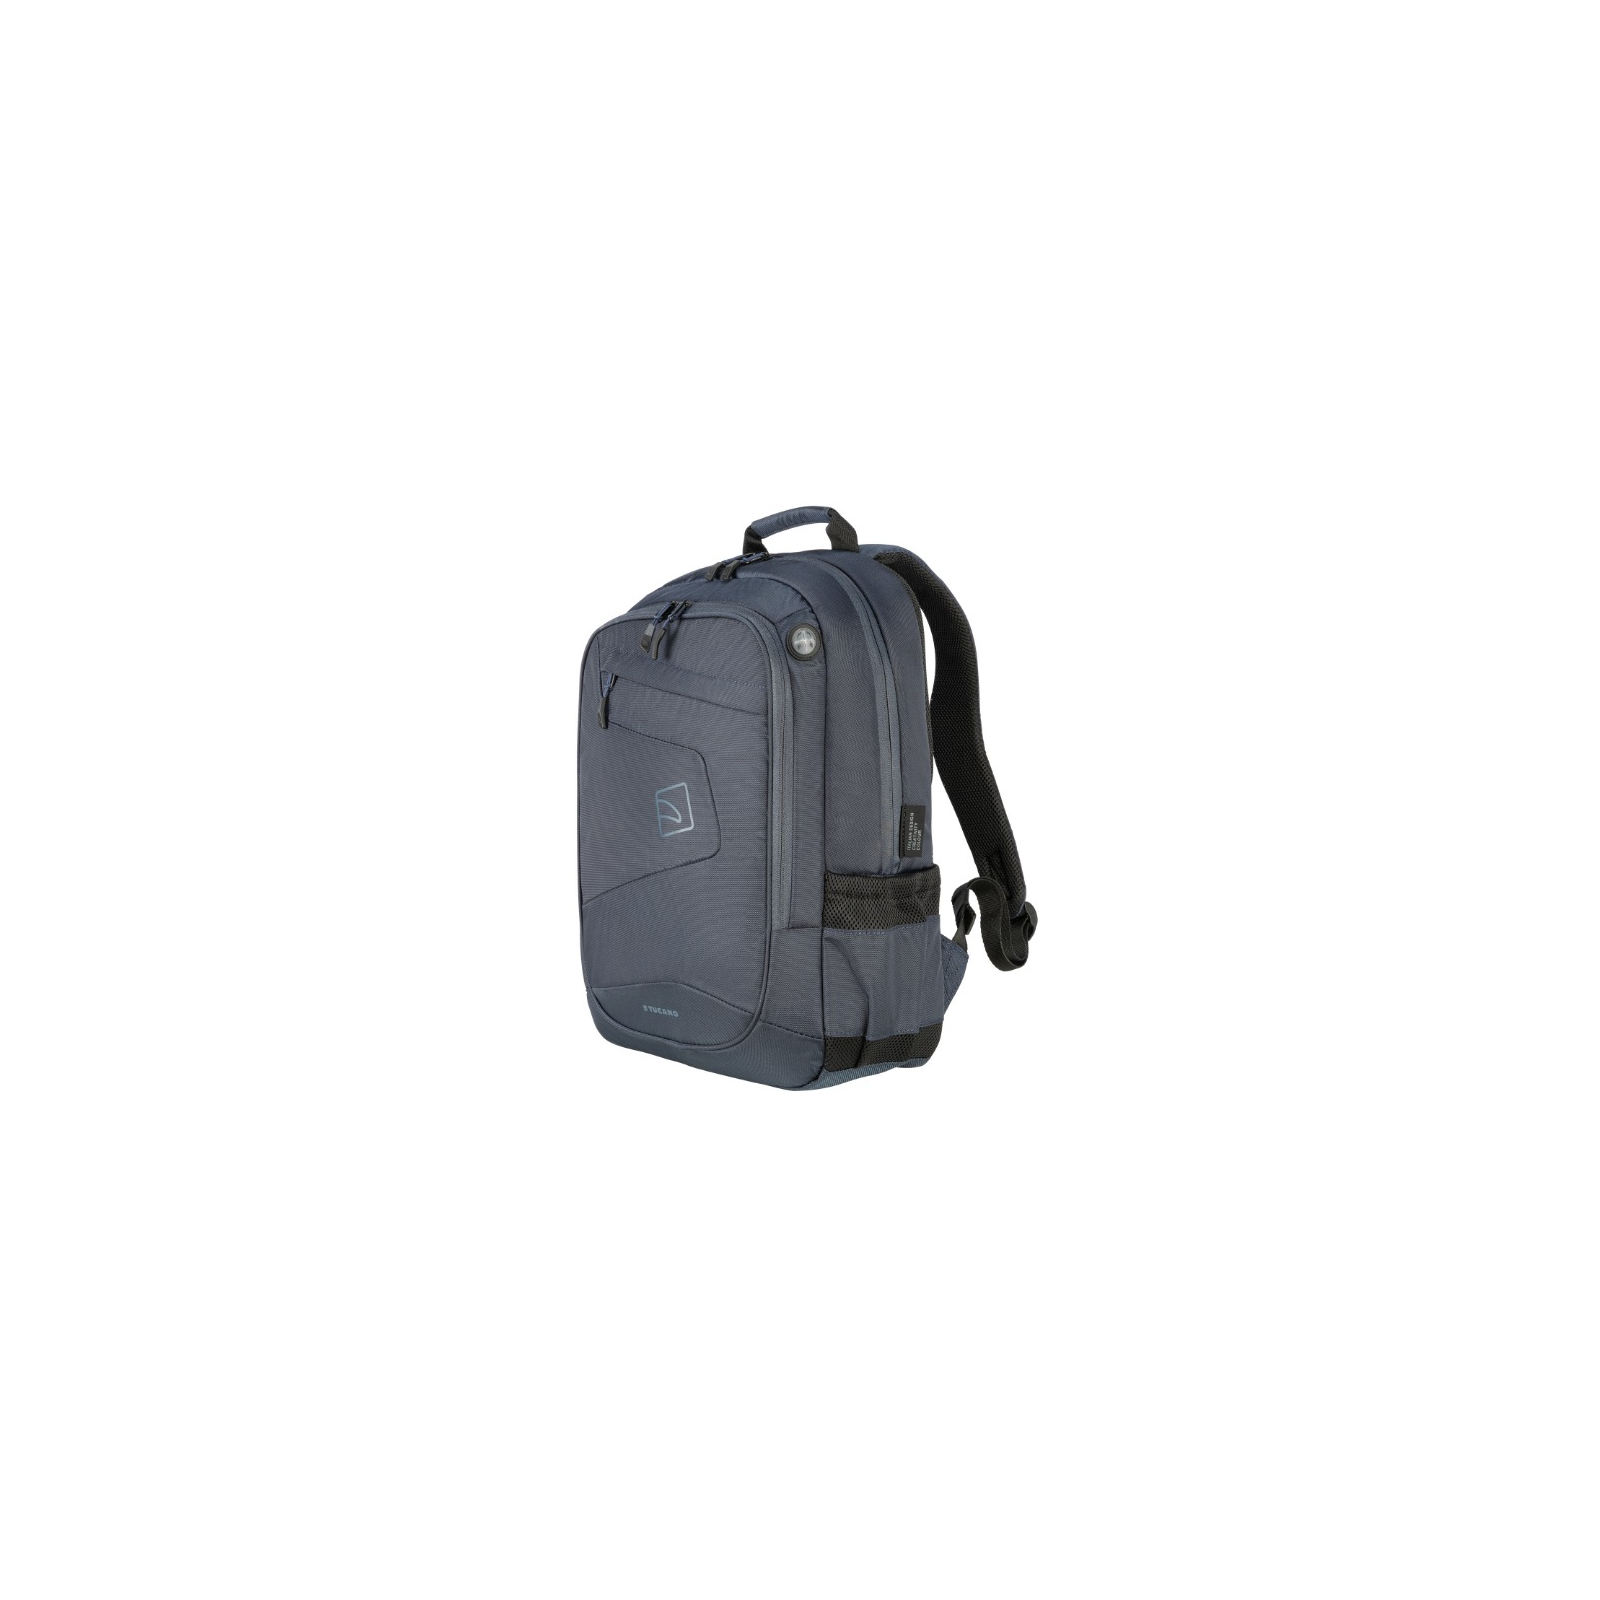 Рюкзак для ноутбука Tucano 15.6 Lato BackPack (Black) (BLABK) изображение 2